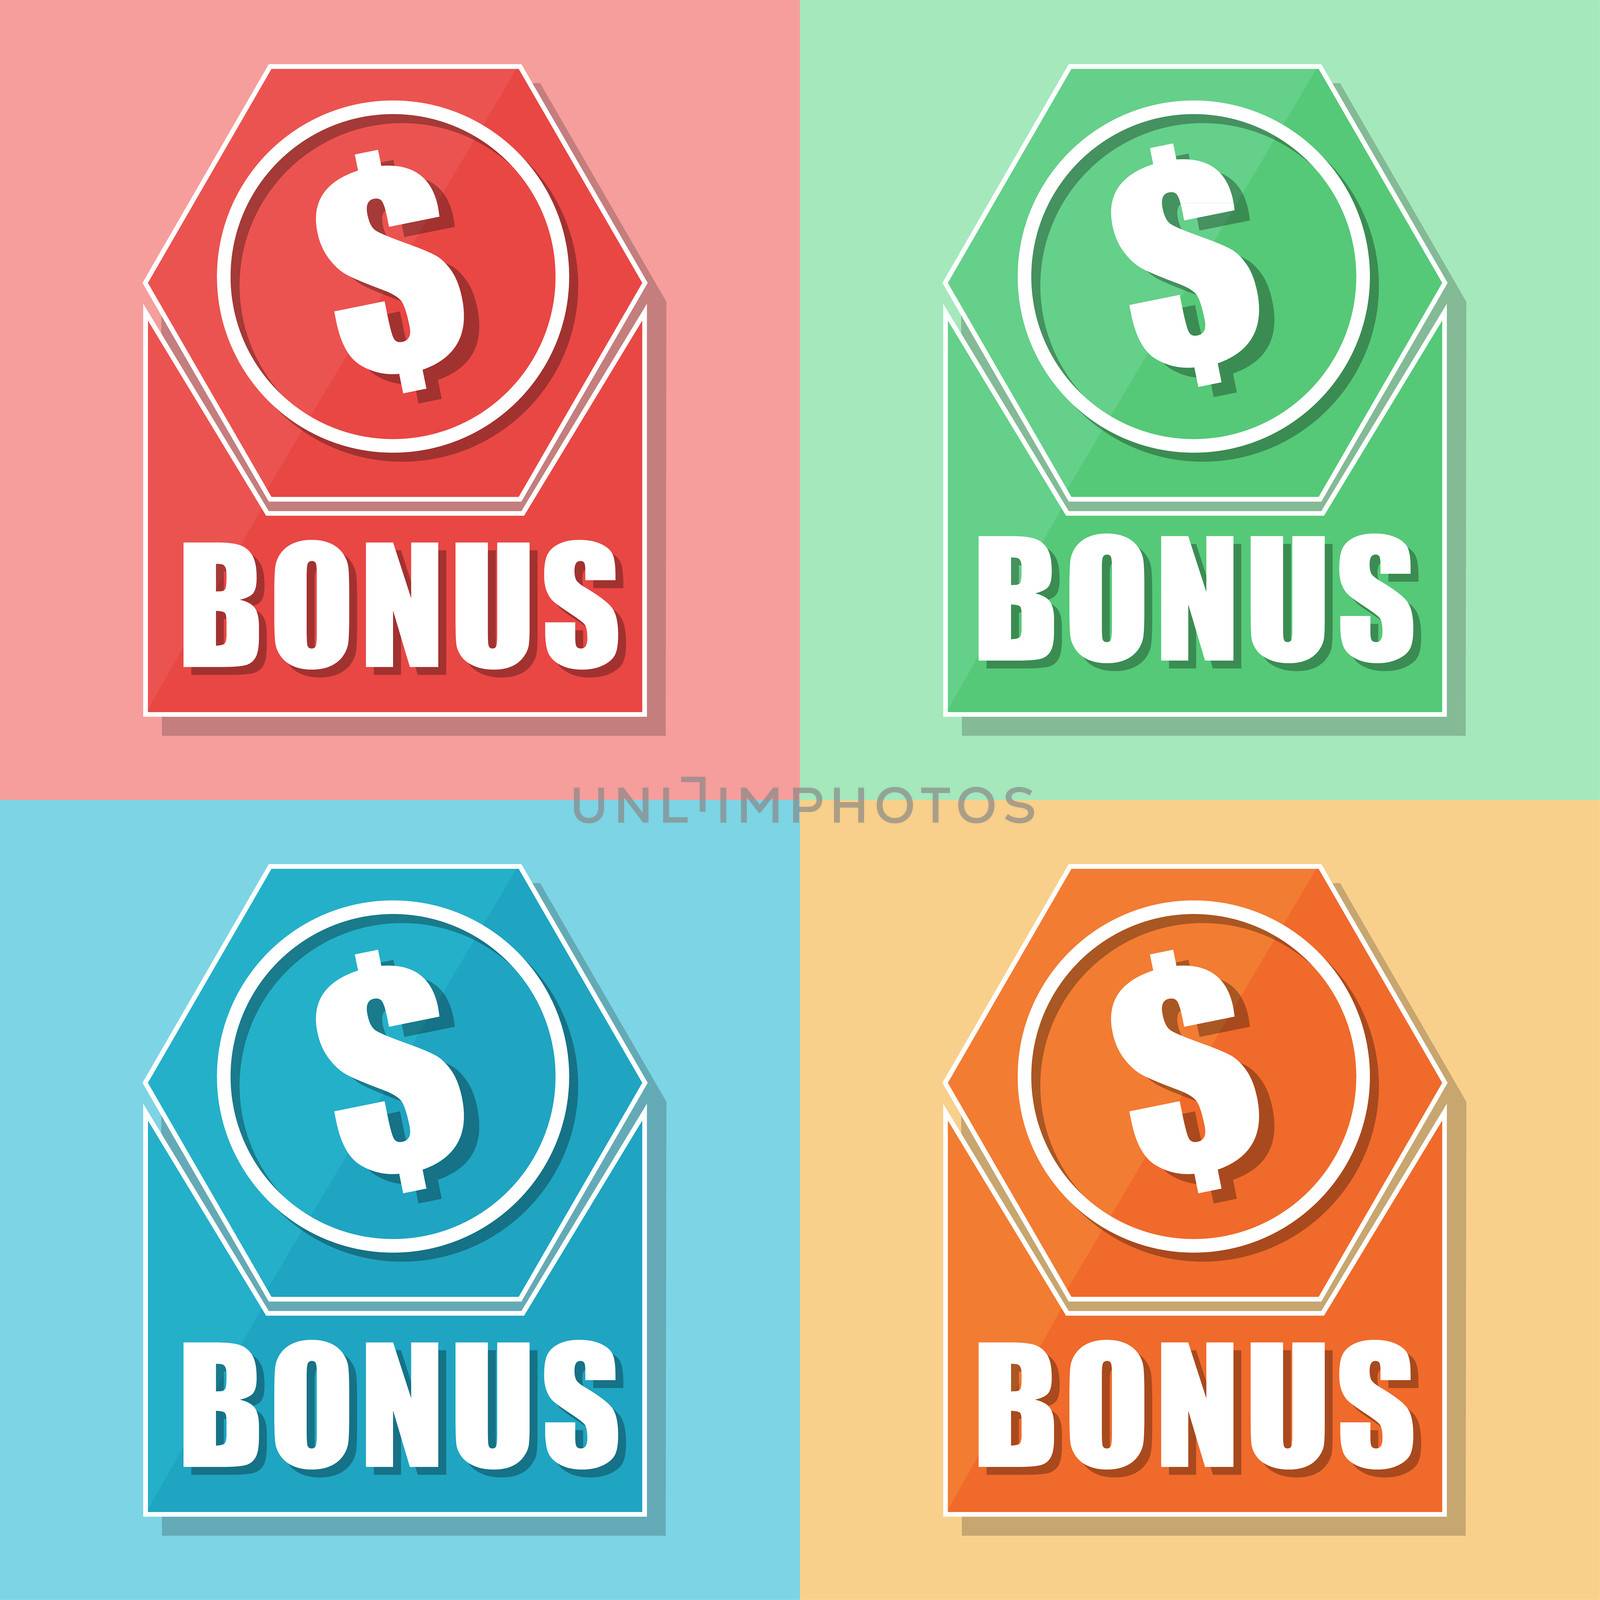 bonus and dollar sign, four colors web icons, flat design, business finance concept